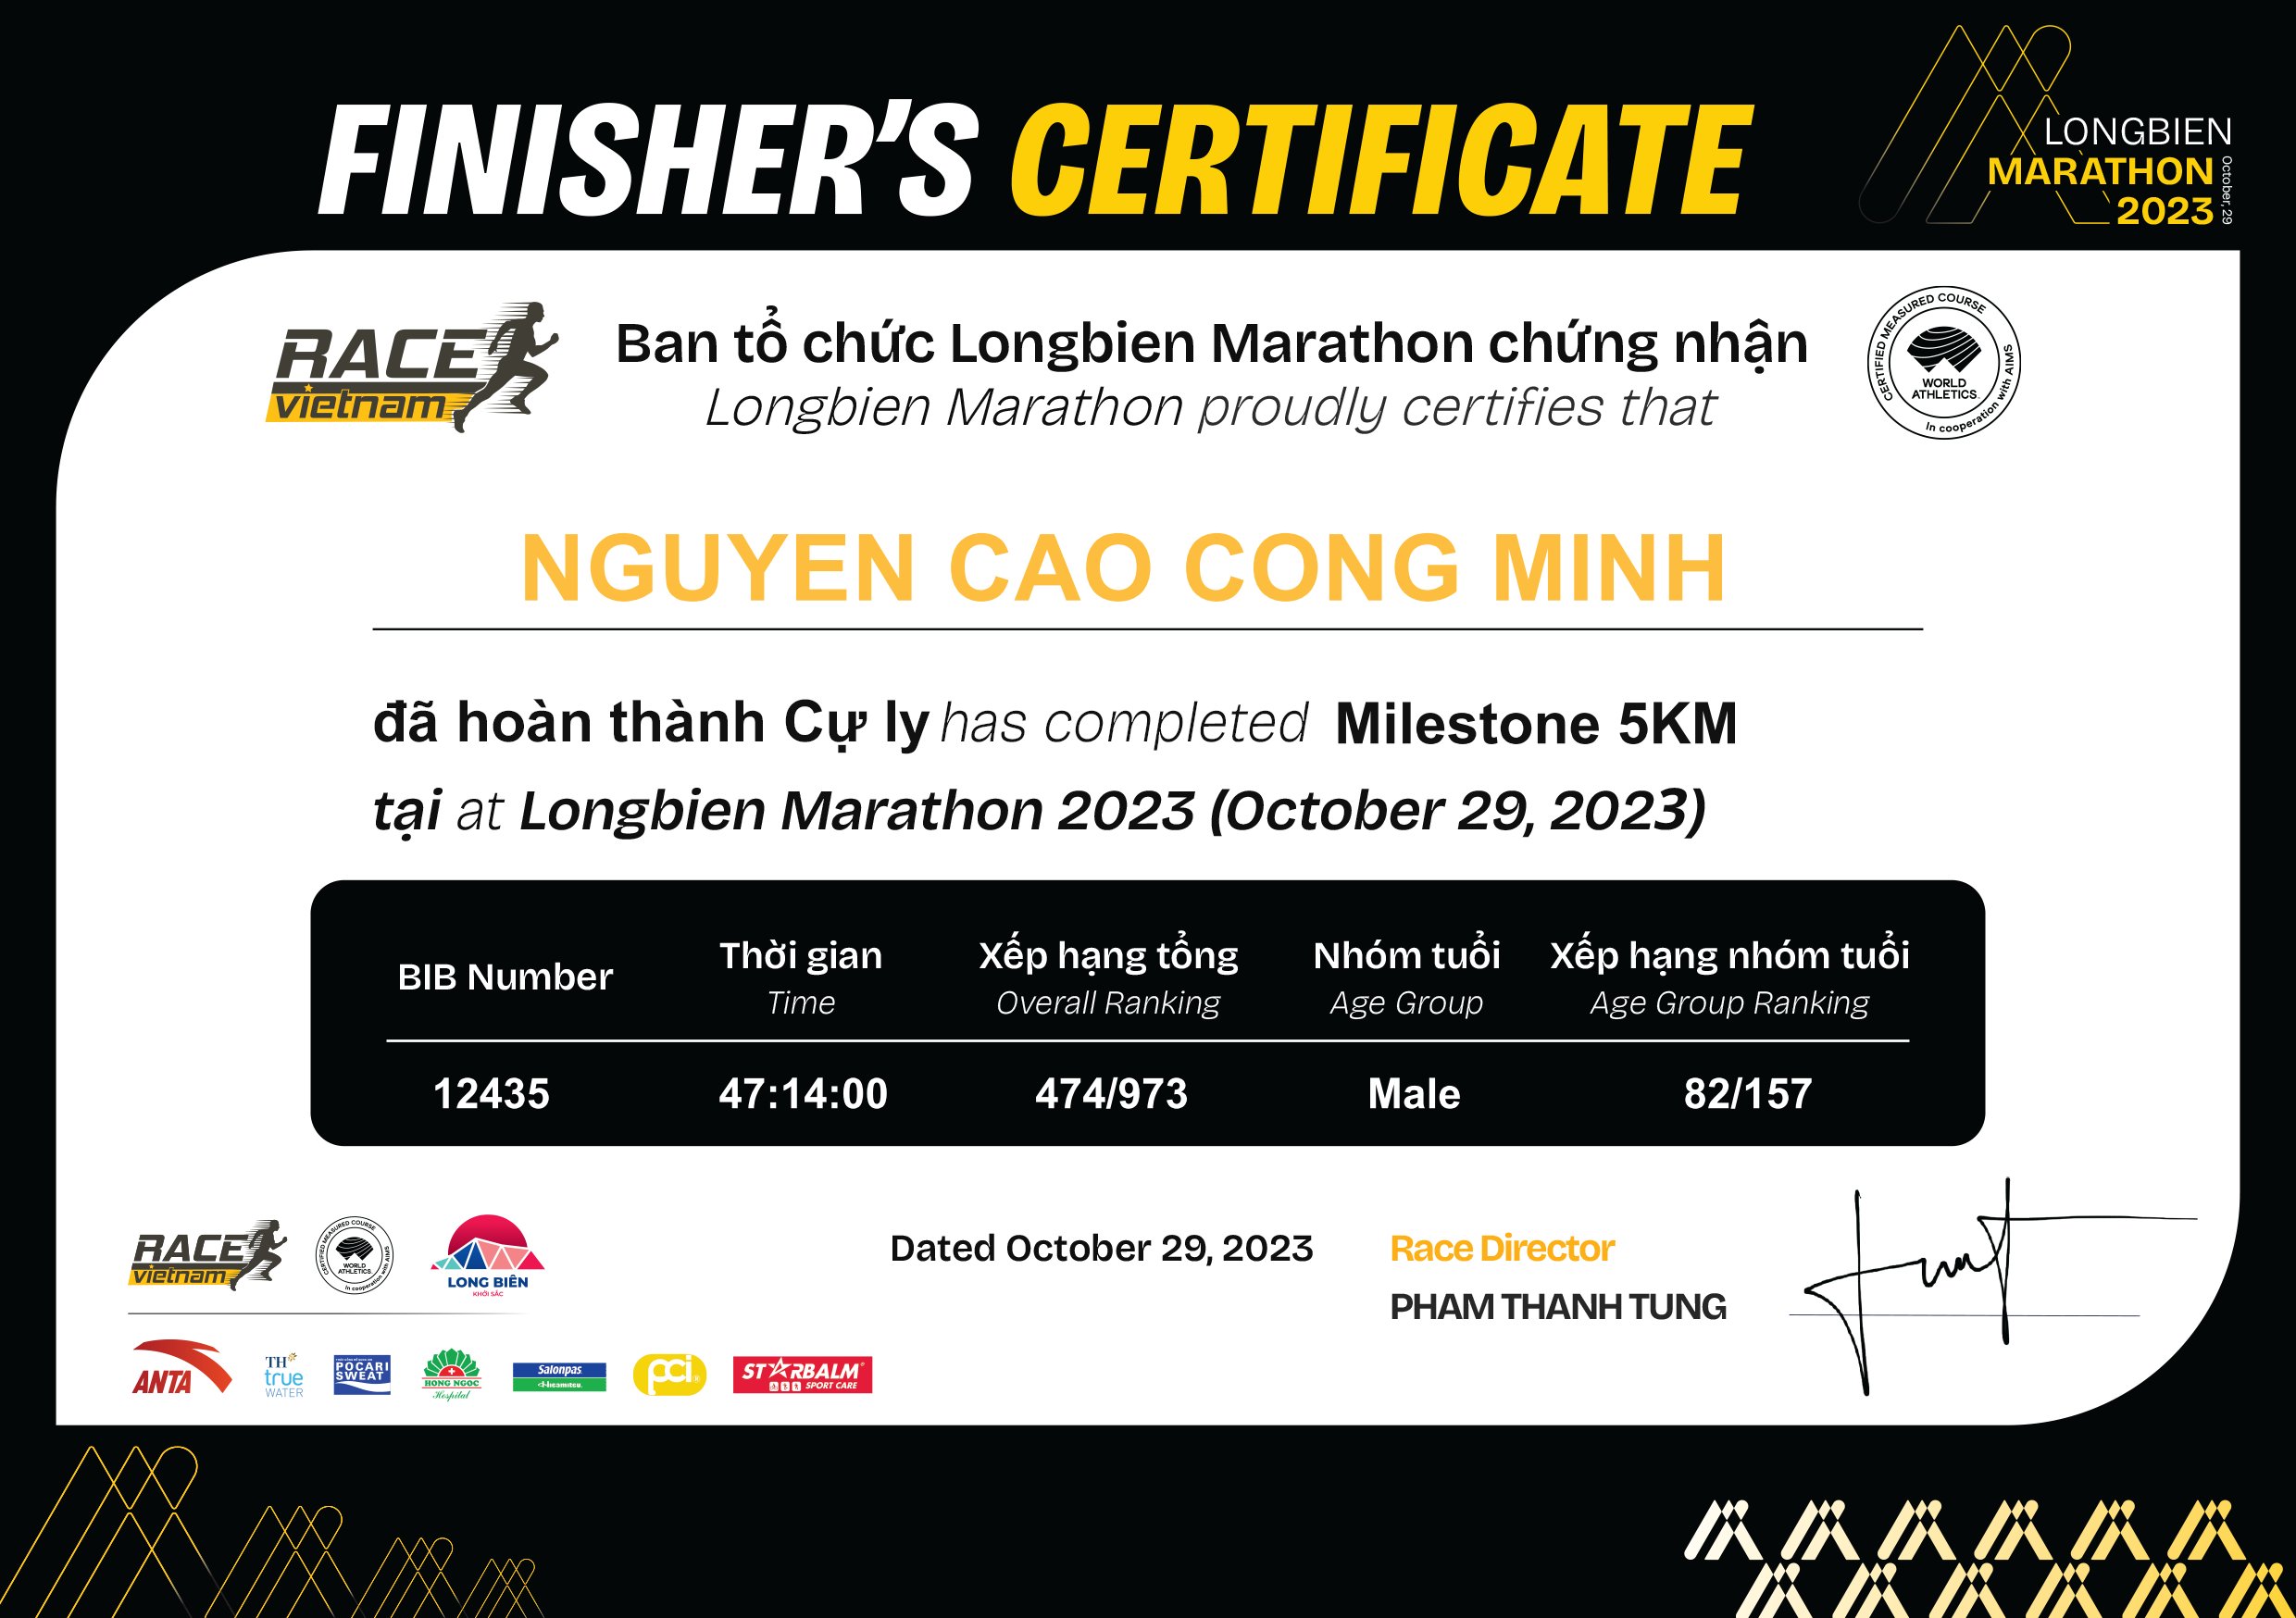 12435 - Nguyen Cao Cong Minh